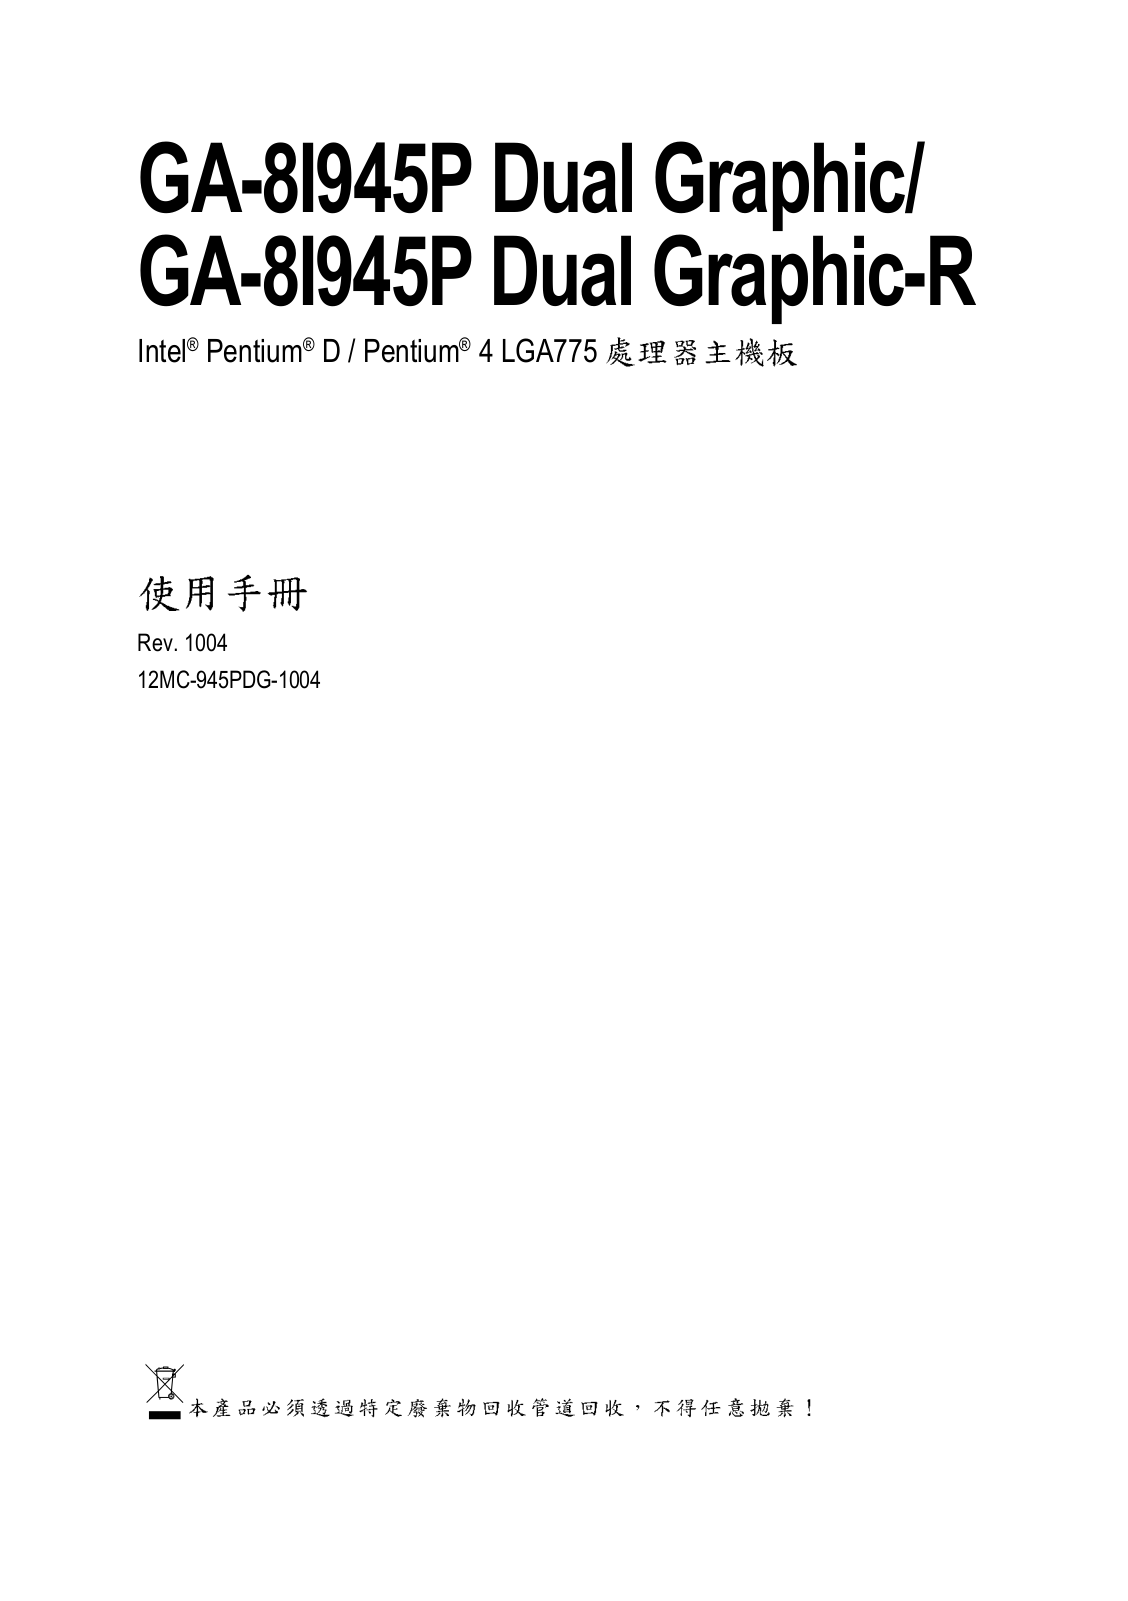 Gigabyte GA-8I945P DUAL GRAPHIC, GA-8I945P DUAL GRAPHIC-R Manual